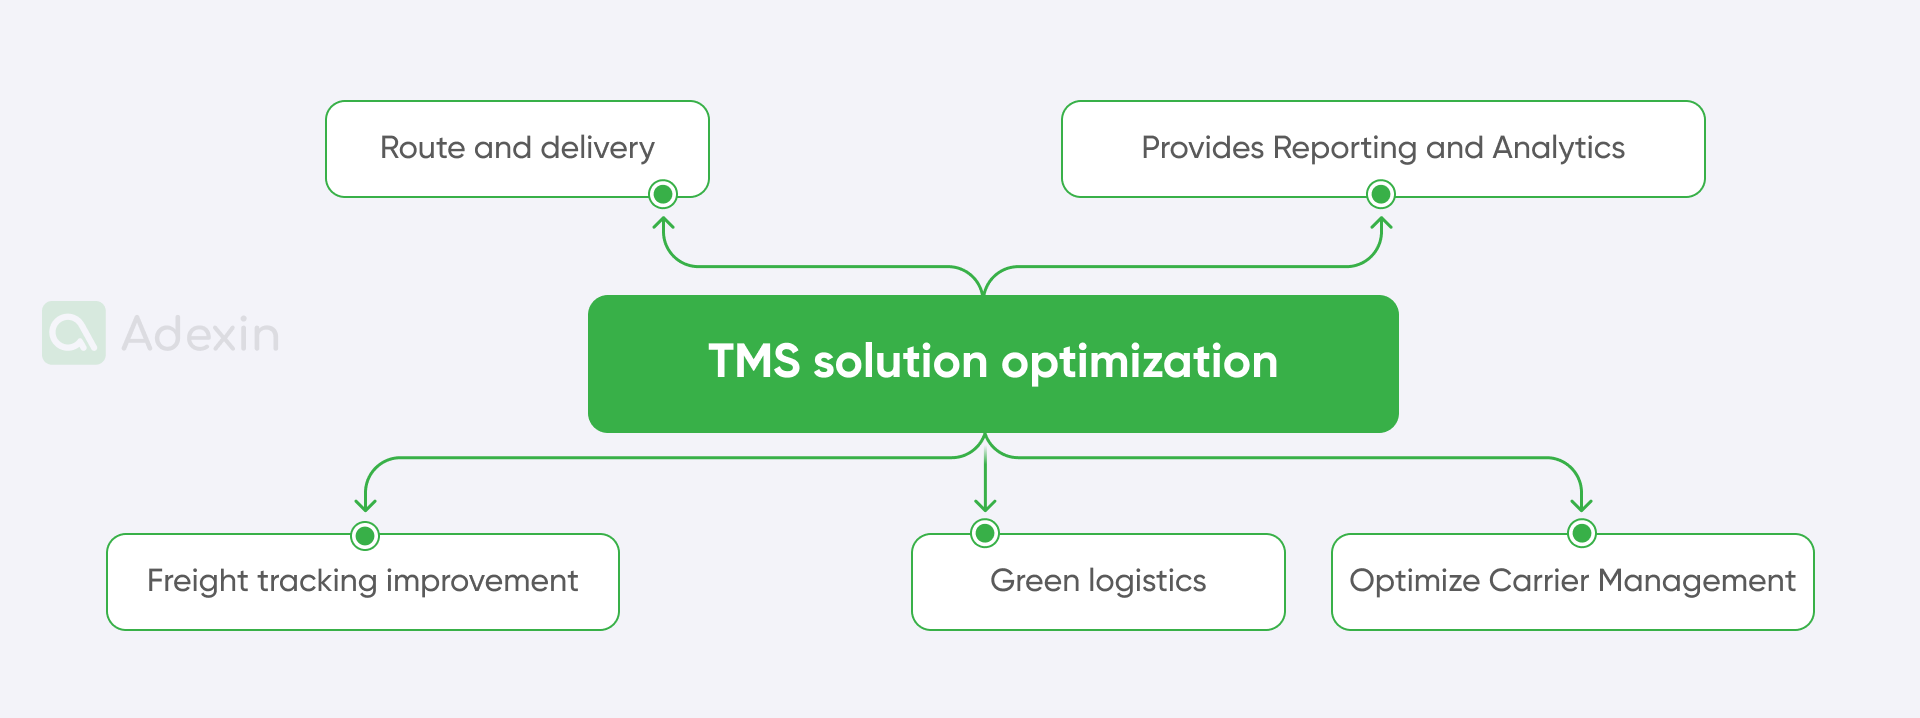 TMS solution optimization